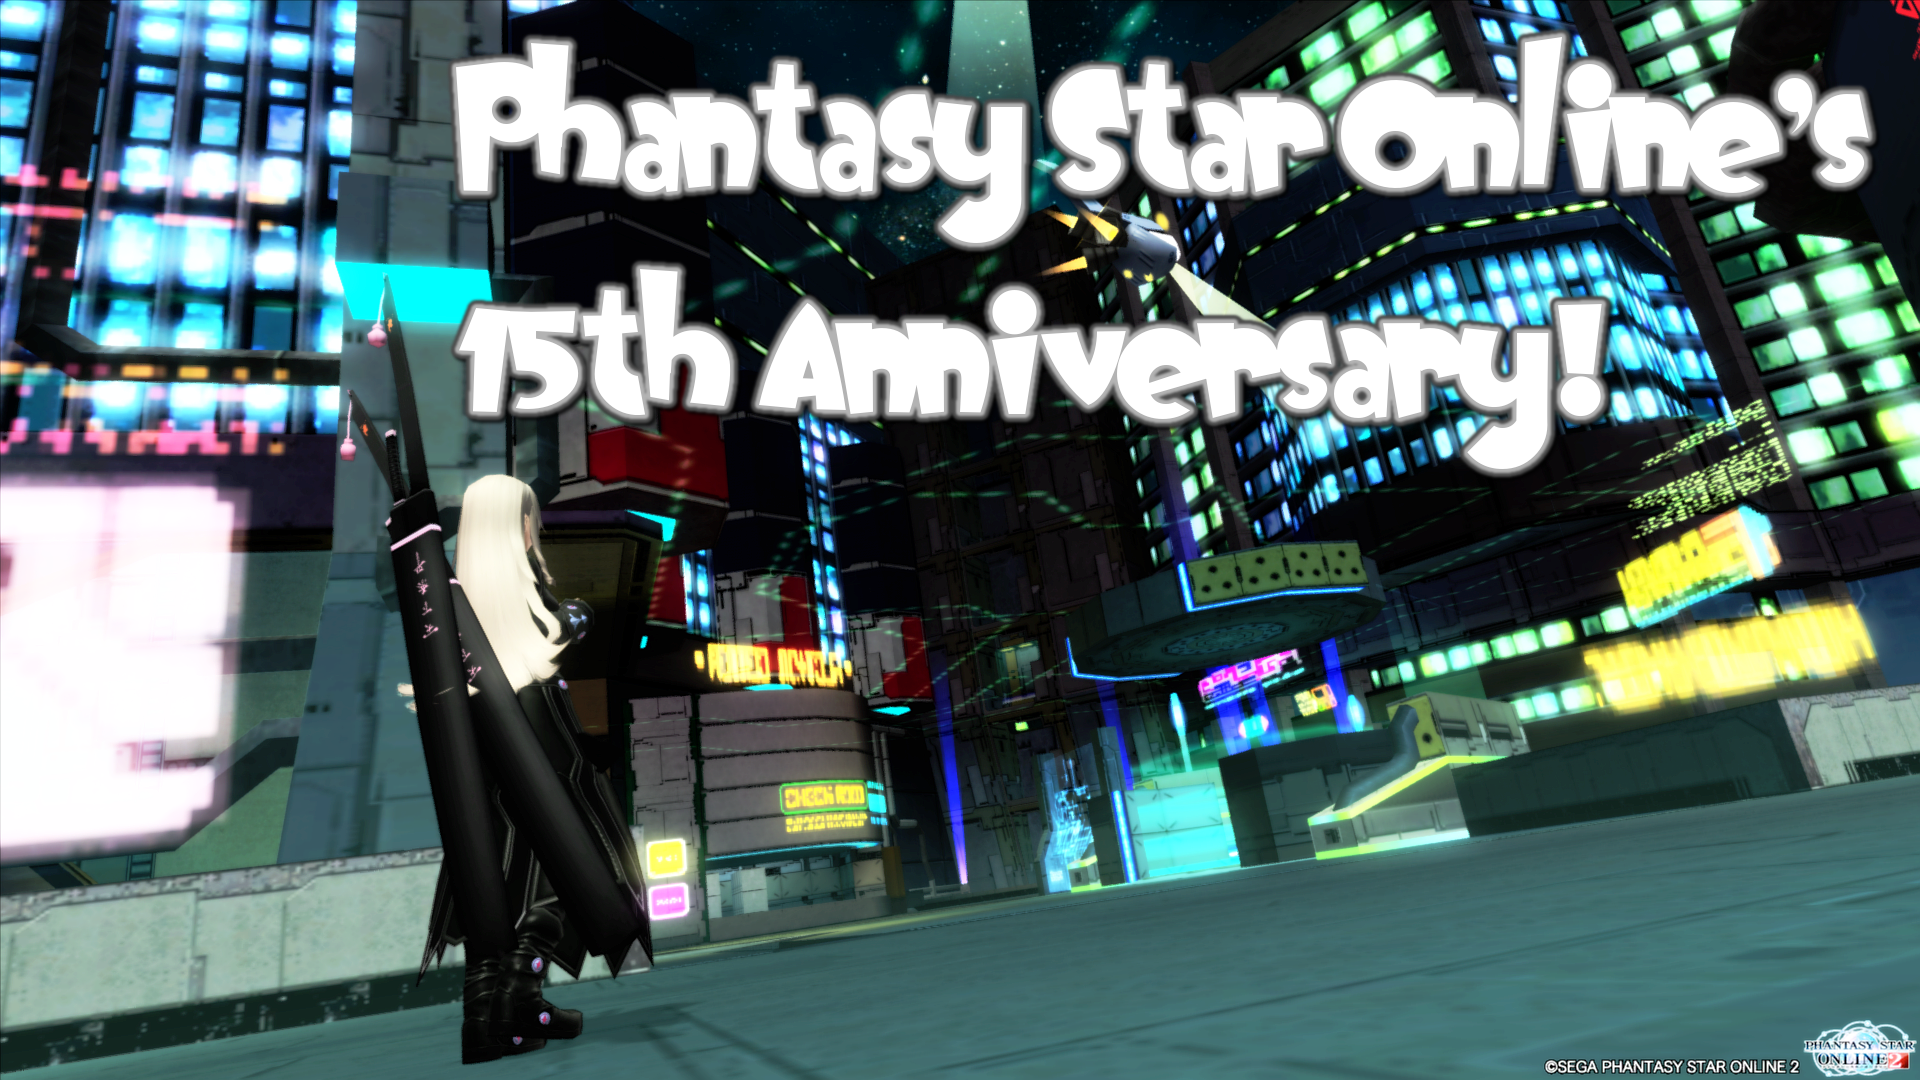 Phantasy Star Online's 15th Anniversary!